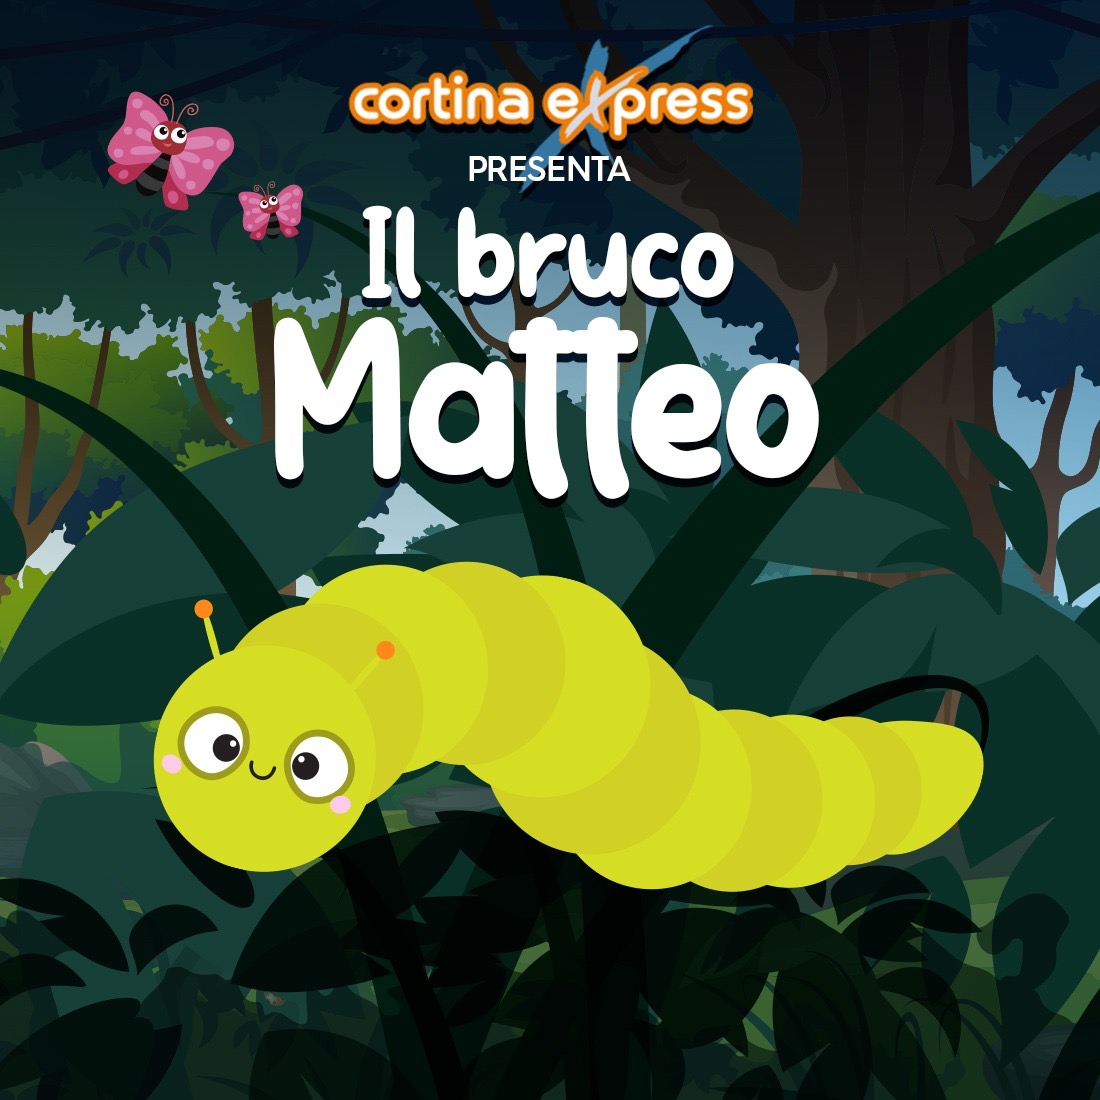 Il_bruco_matteo_cortina_express_bagus